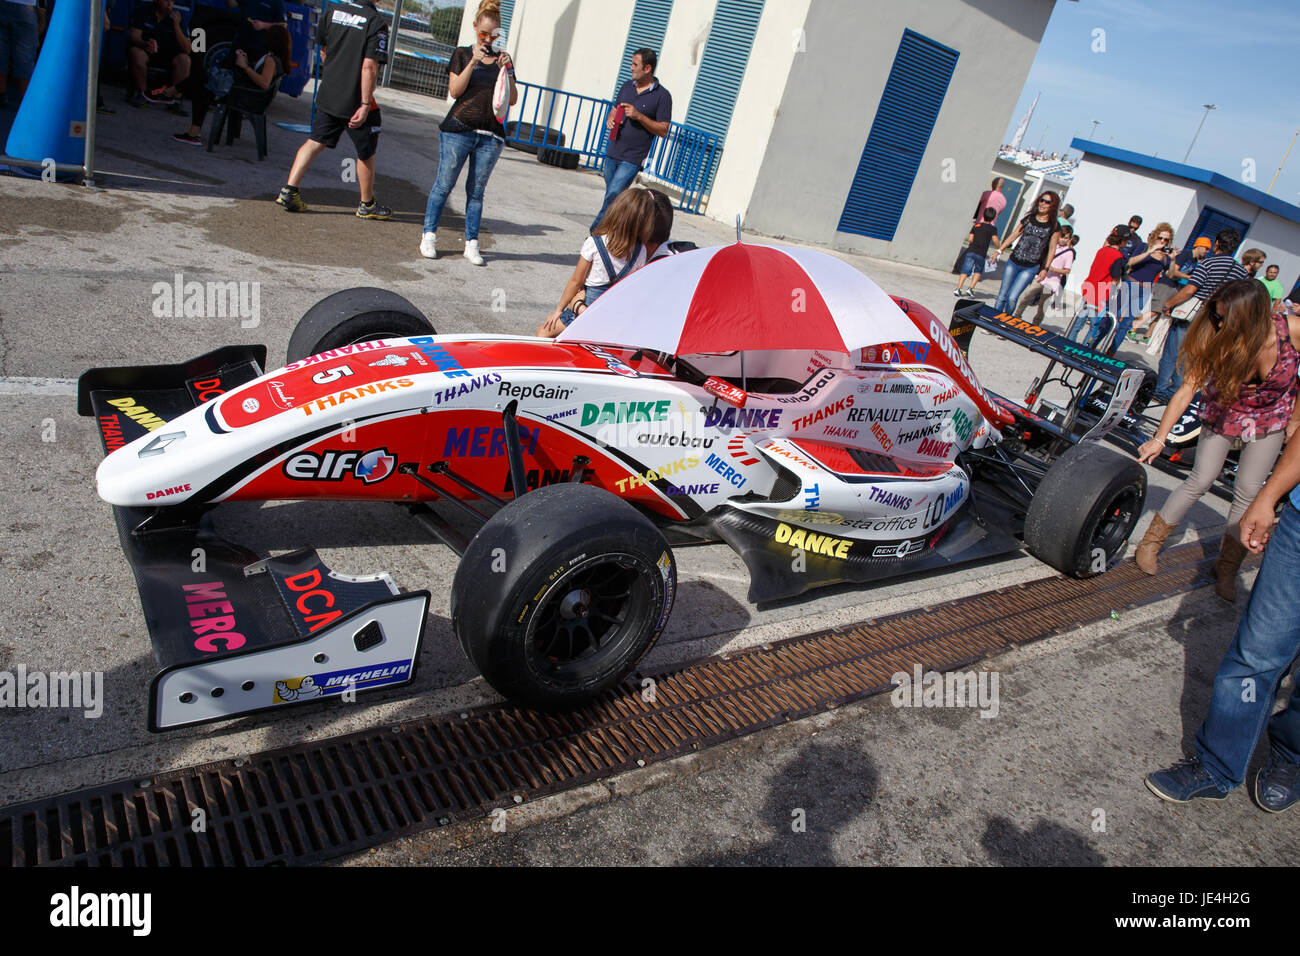 JEREZ DE LA FRONTERA, SPAIN - OCTOBER 19, 2014: People taking pictures with Levin Amweg's car of ART Junior Team at Jerez racetrack Stock Photo